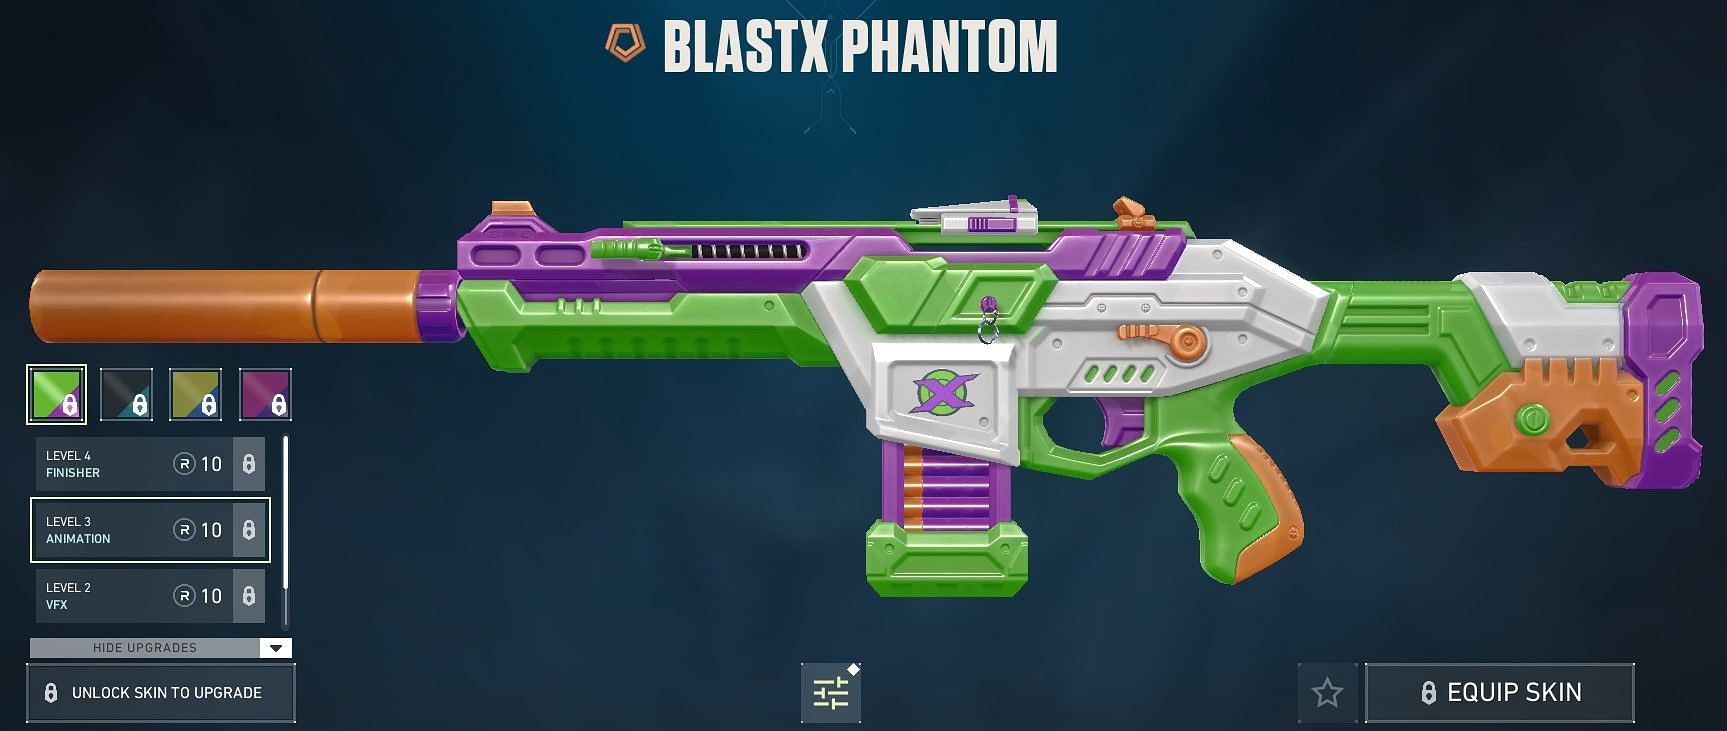 Blastx Phantom (Image via Riot Games)